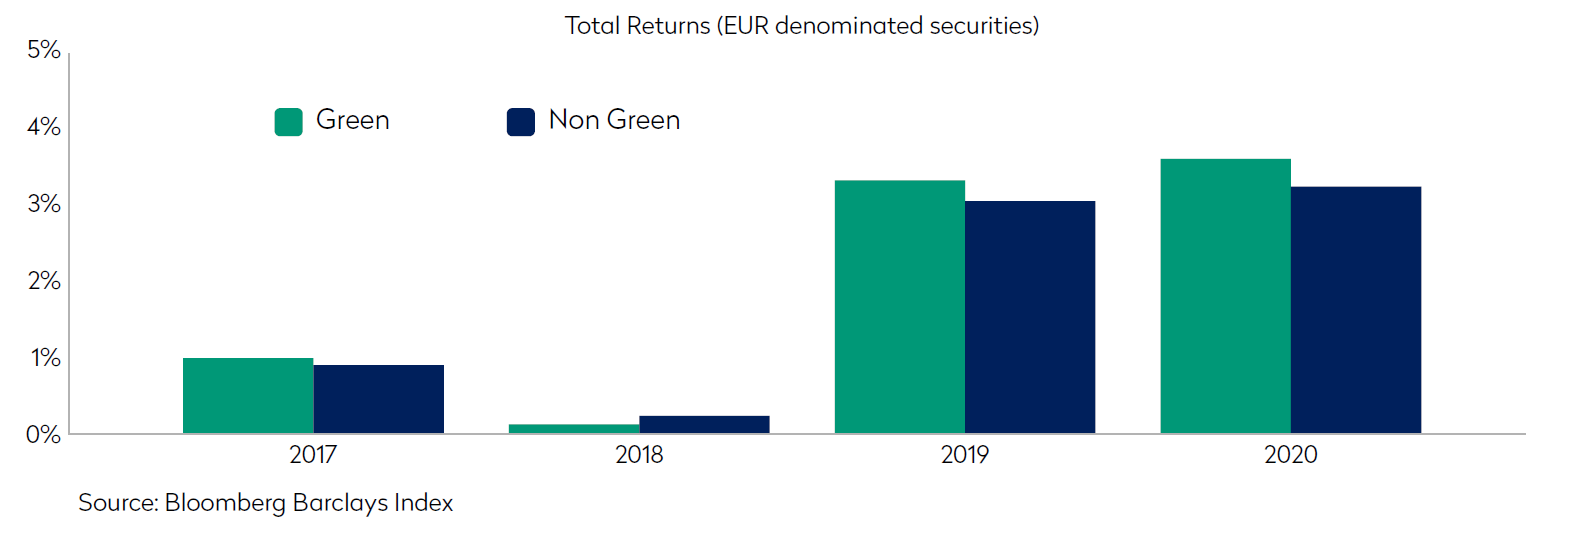 green bonds and non green bonds total returns